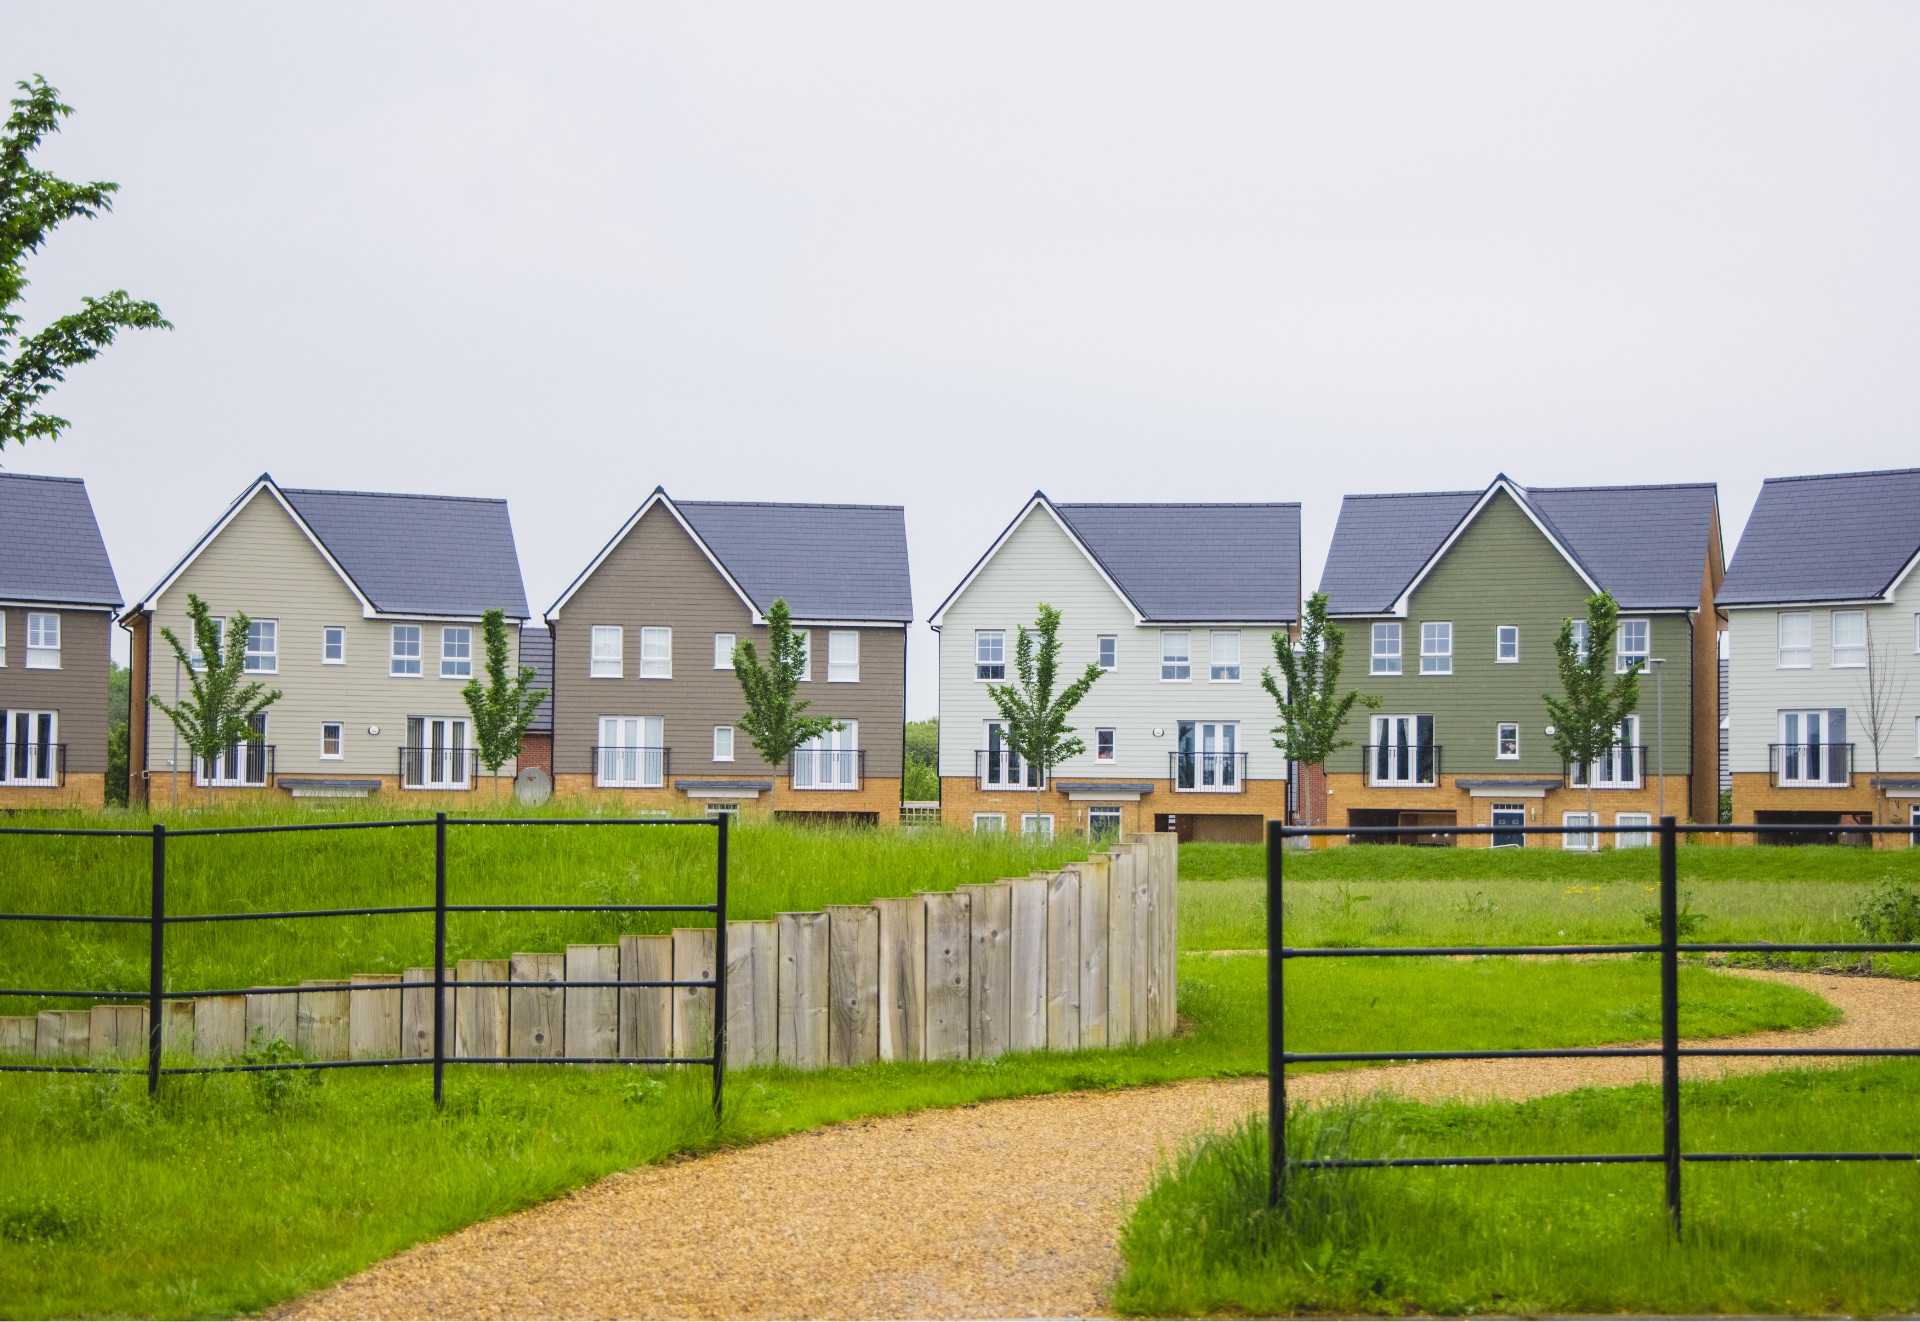 Row of new homes with grassland around them.